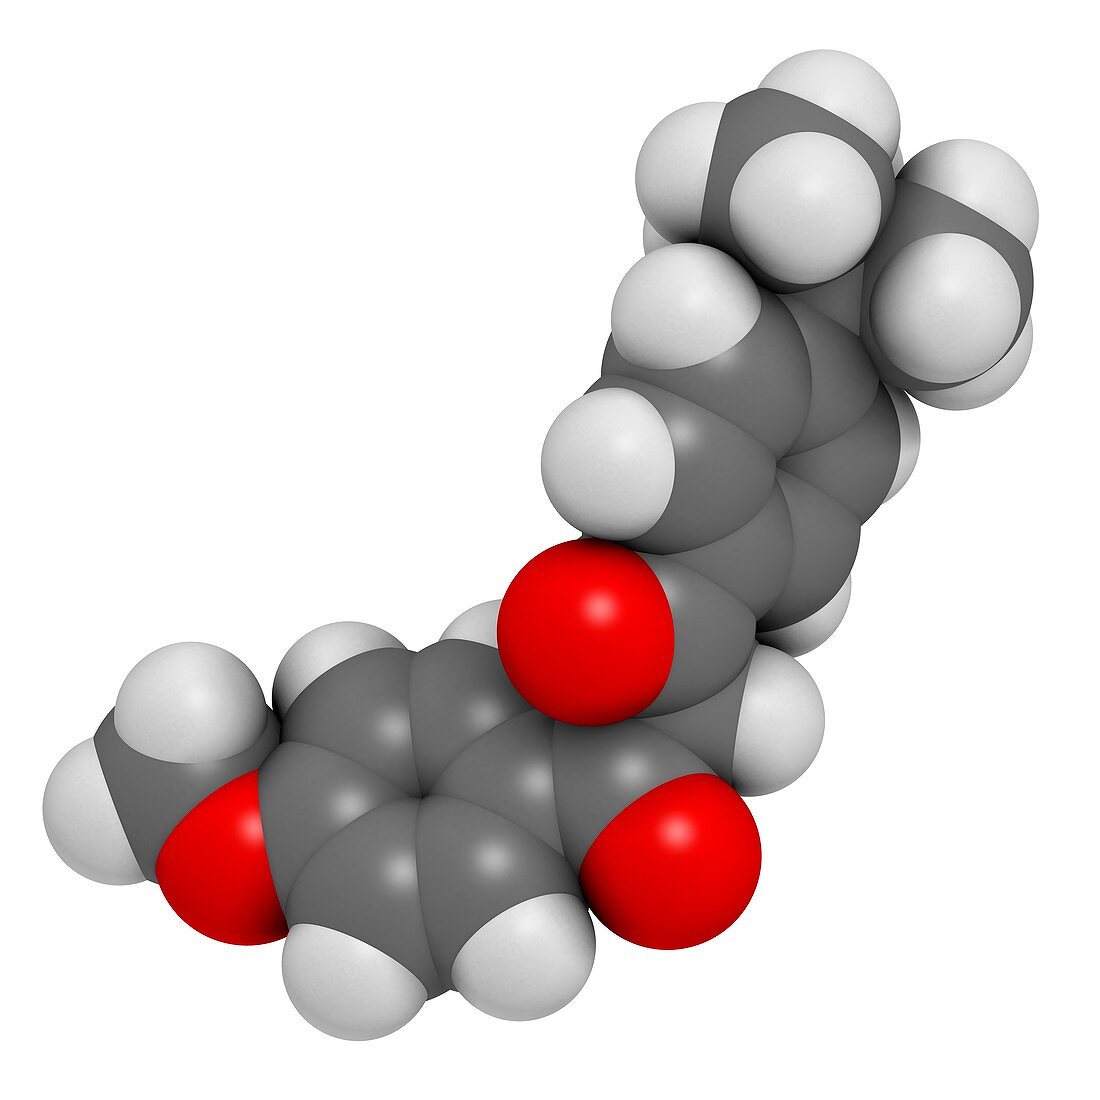 Avobenzone sunscreen molecule